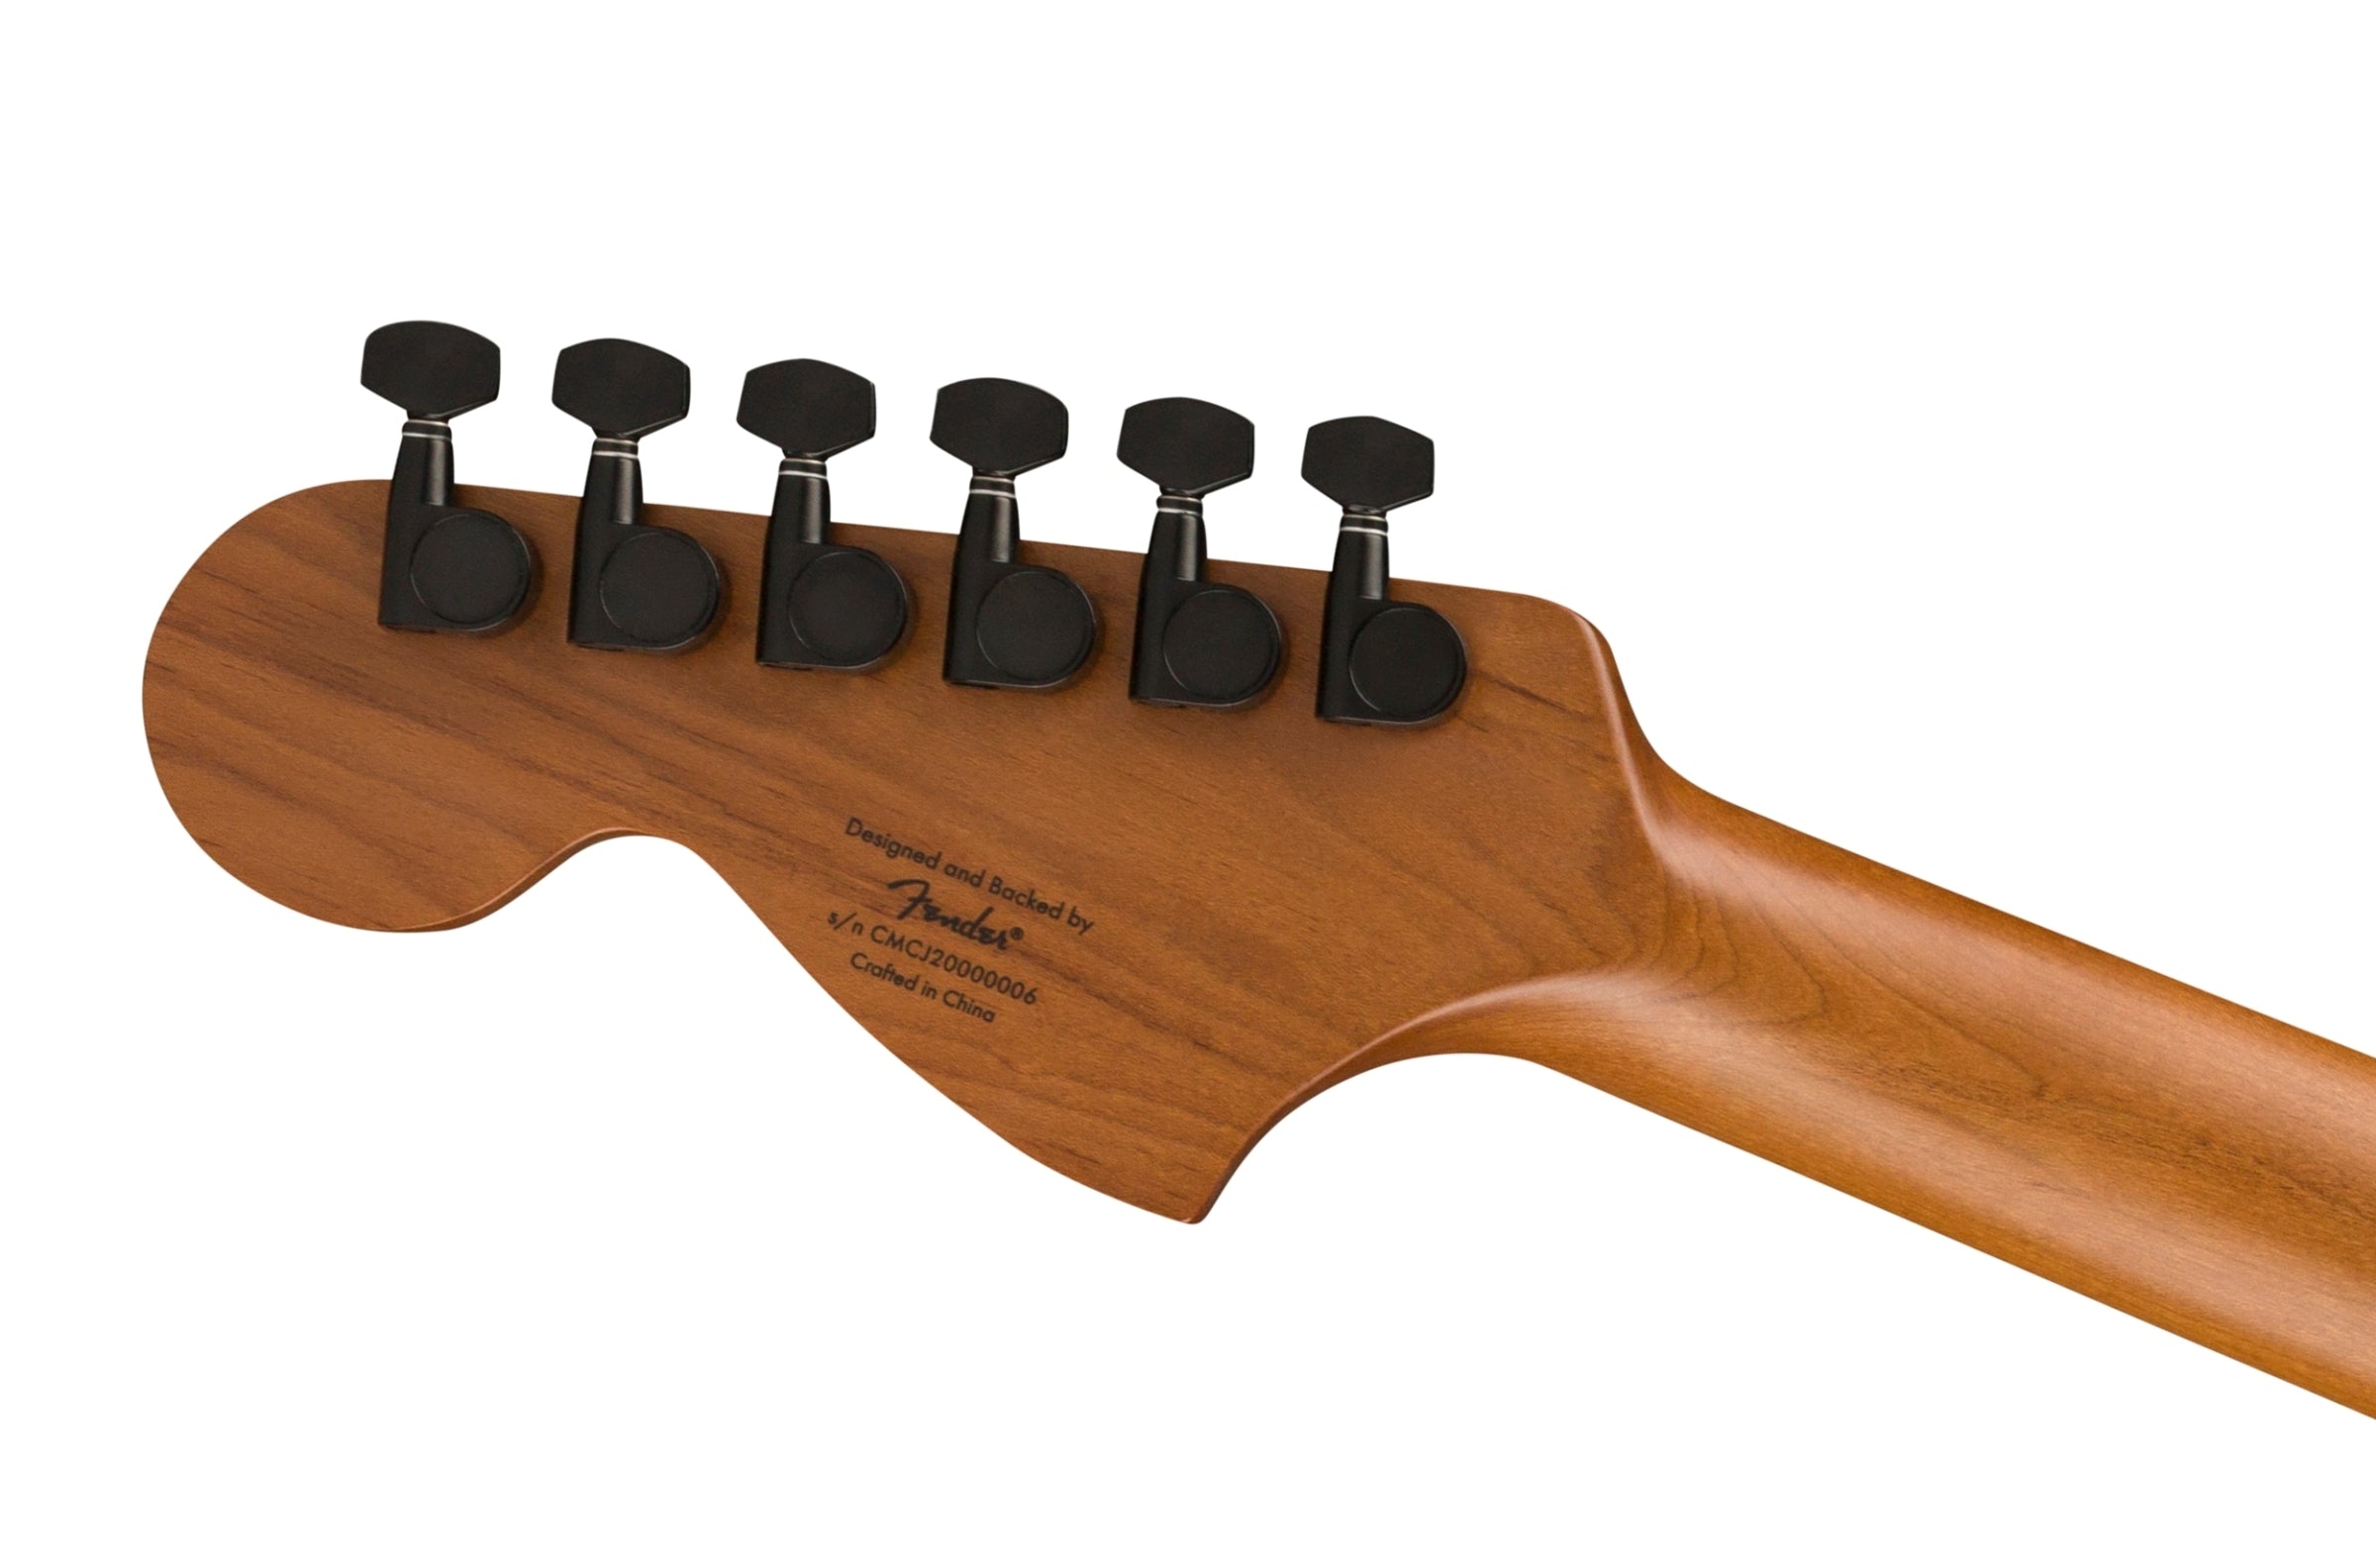 Squier Contemporary Stratocaster Special Electric Guitar - Skyburst Metallic